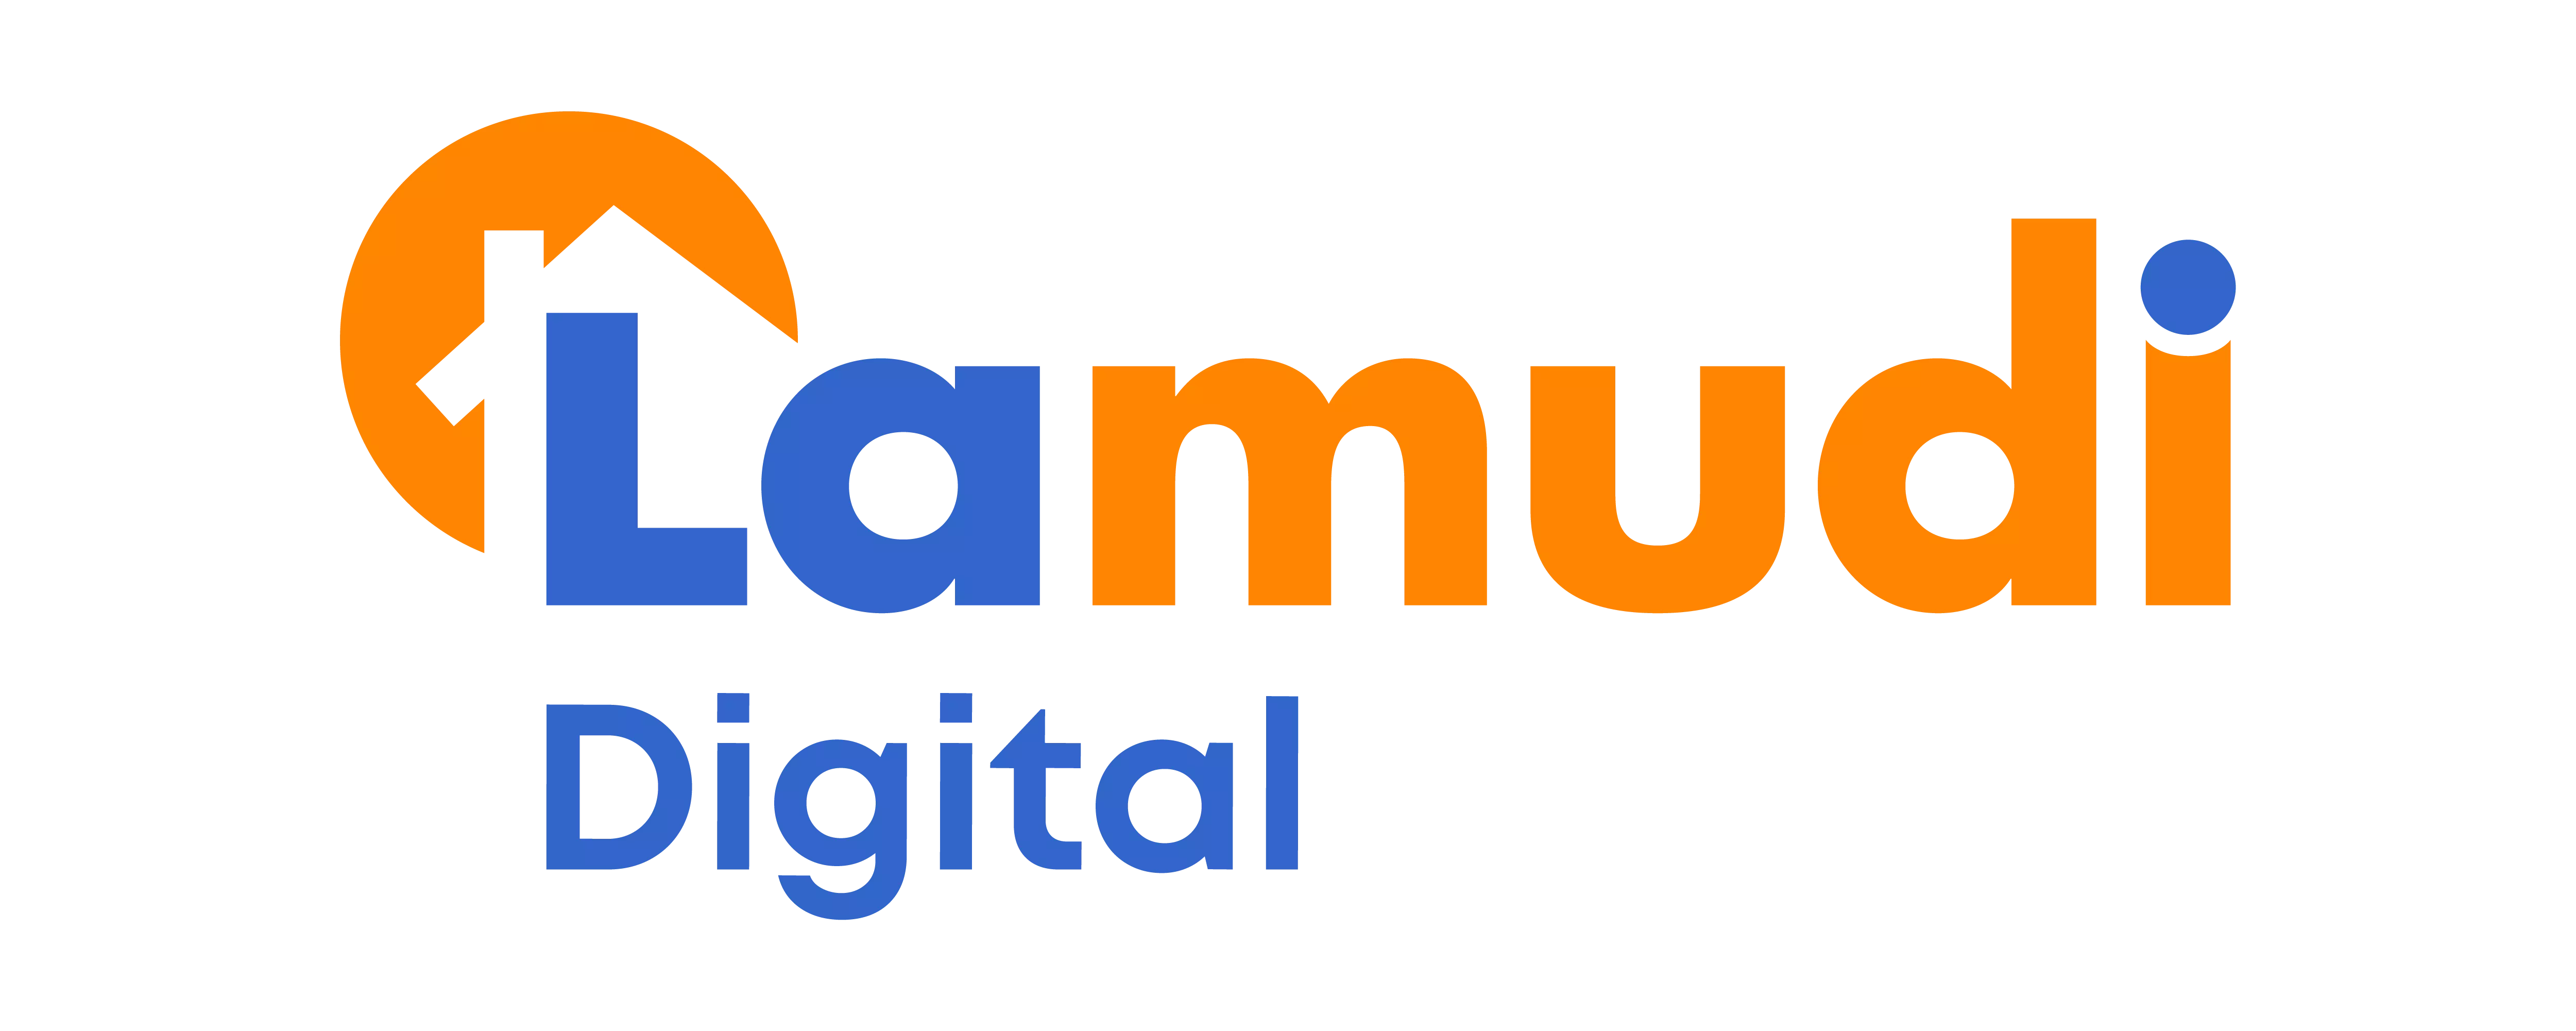 Lamudi Logo